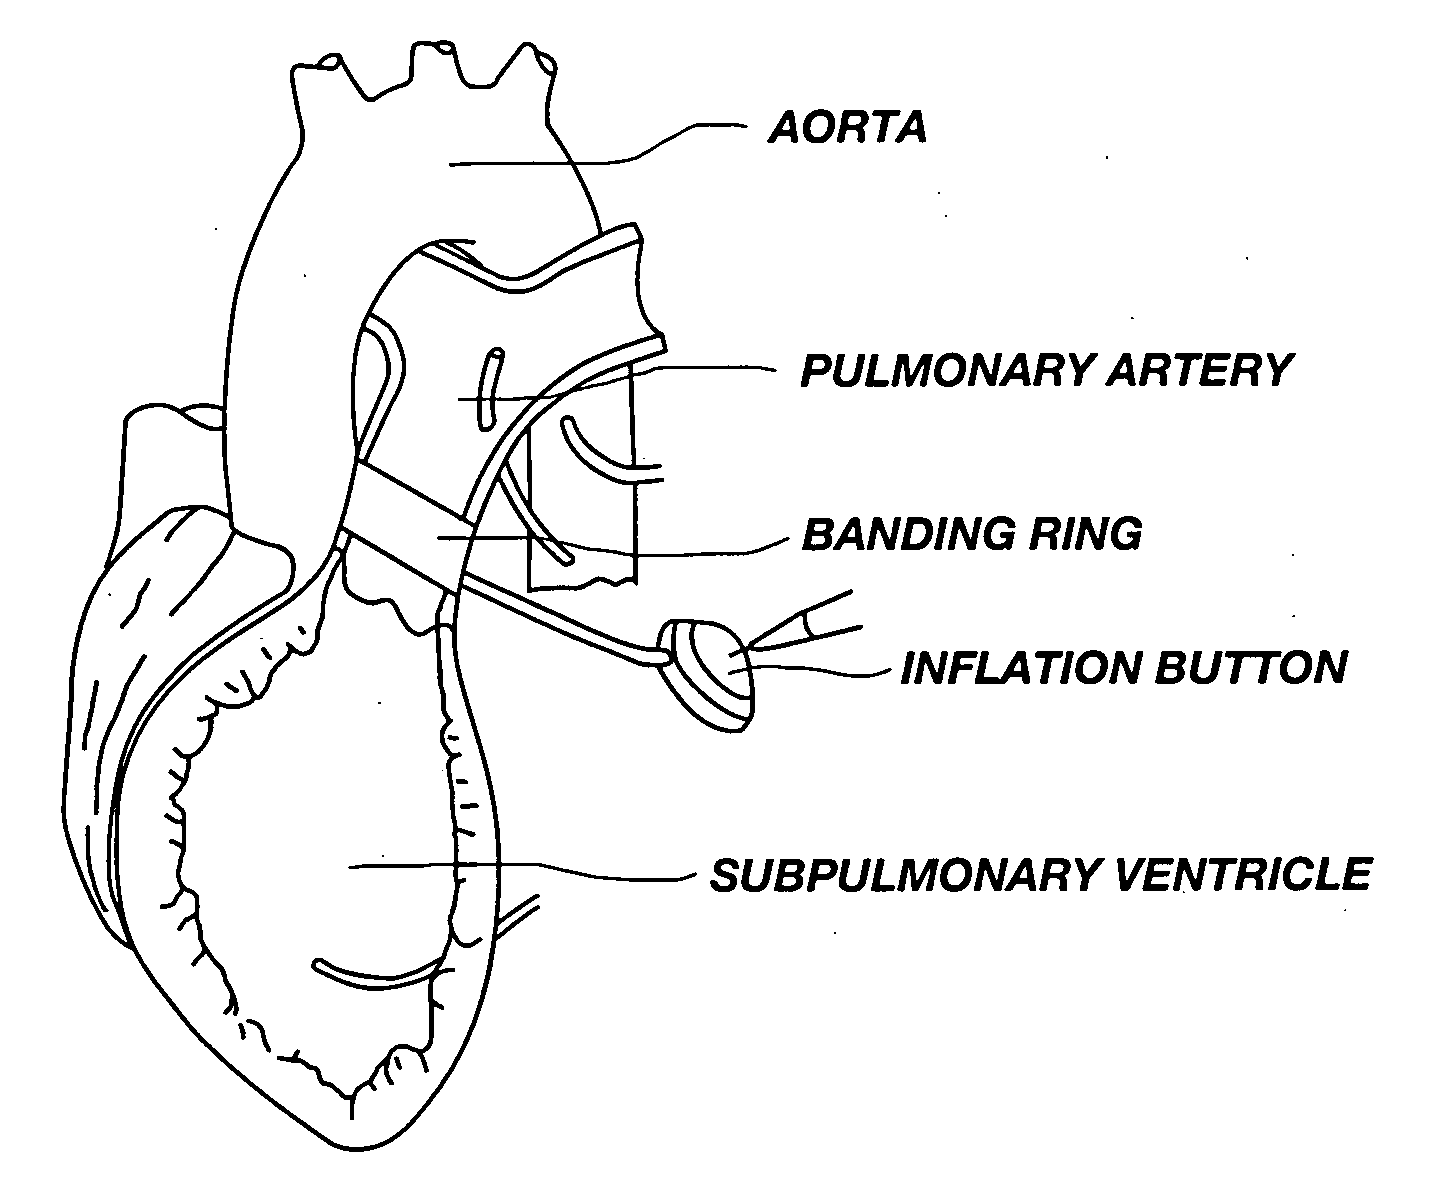 Pulmonary artery banding device